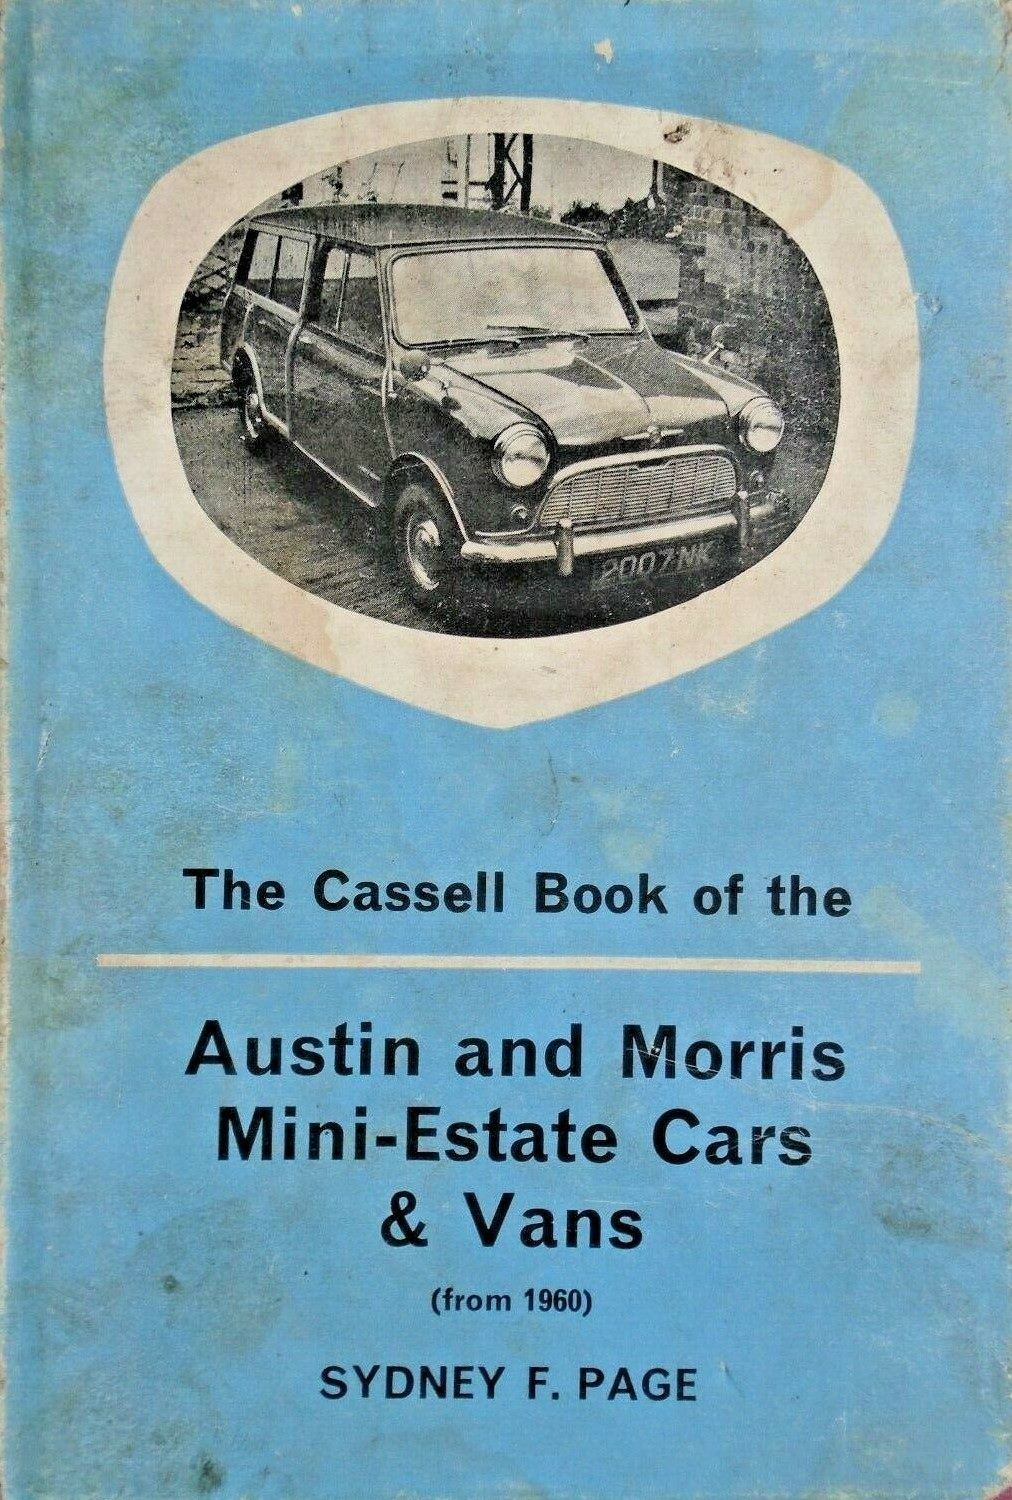 Austin Mini-Countryman, Morris Mini-Traveller and B.M.C. Mini-Vans (from 1960)